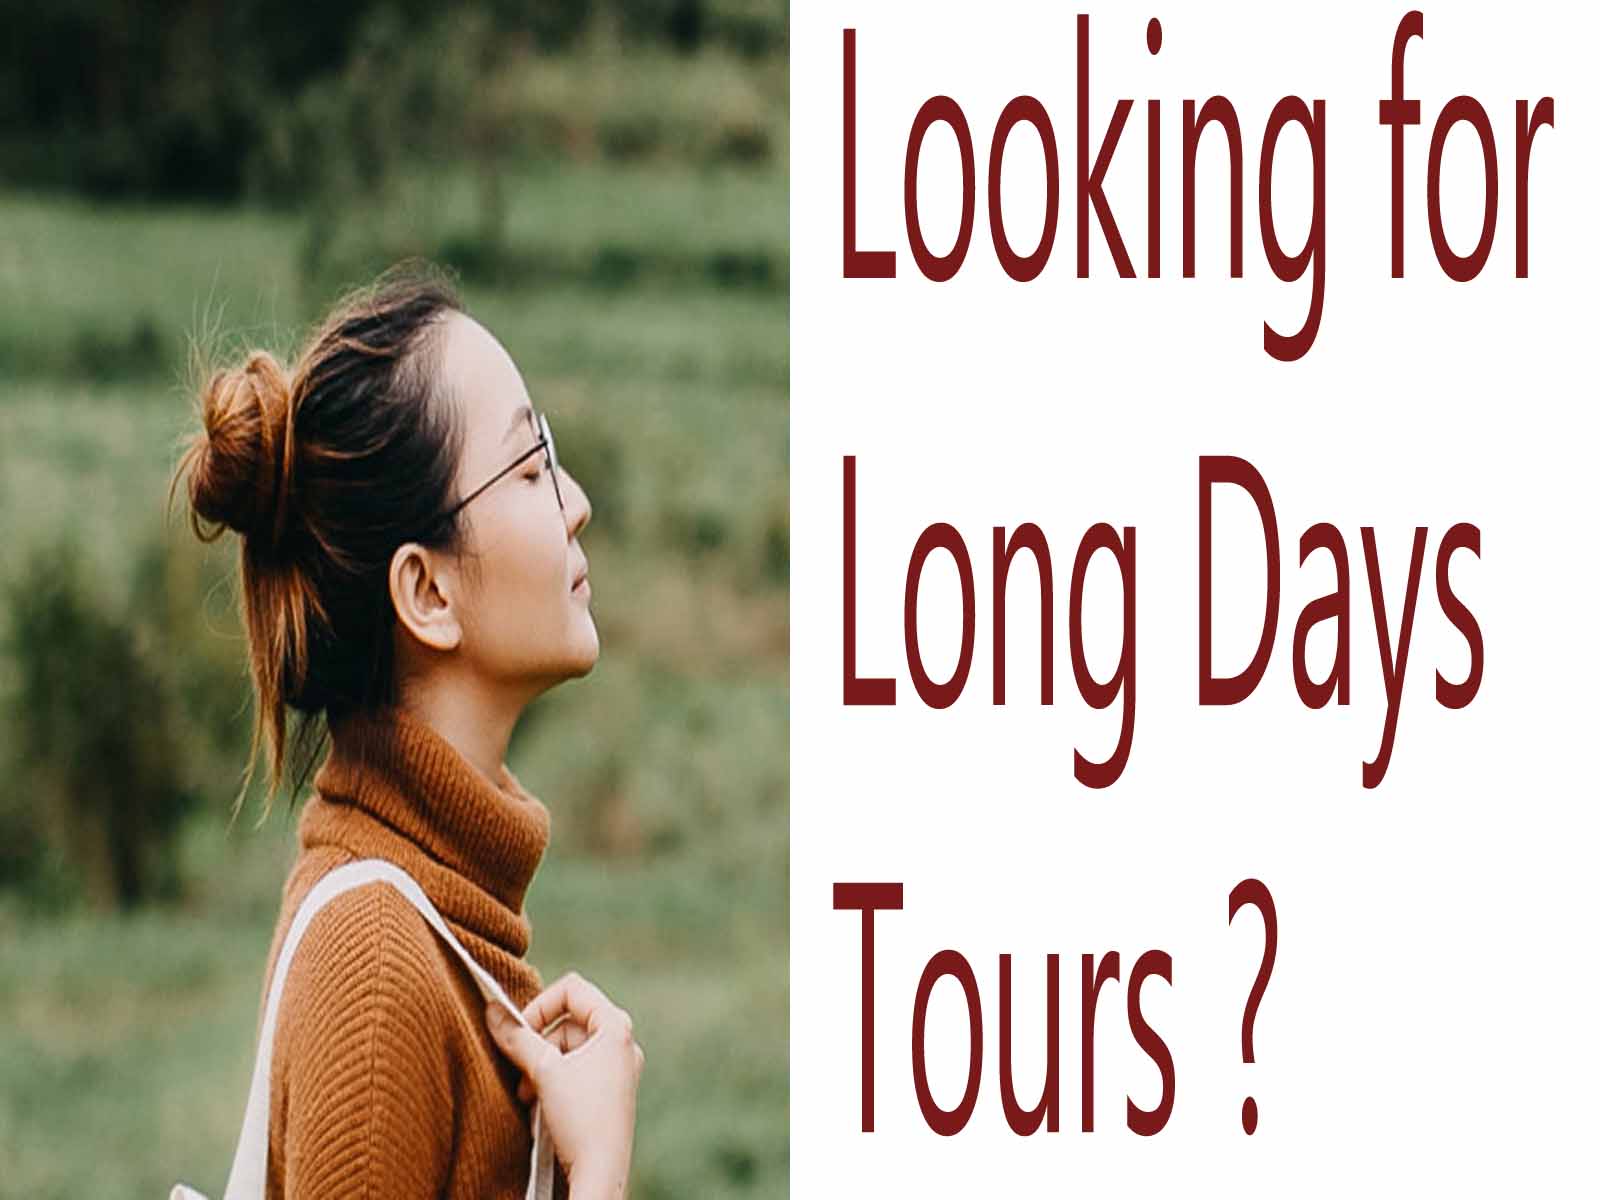 bangladesh tour operators